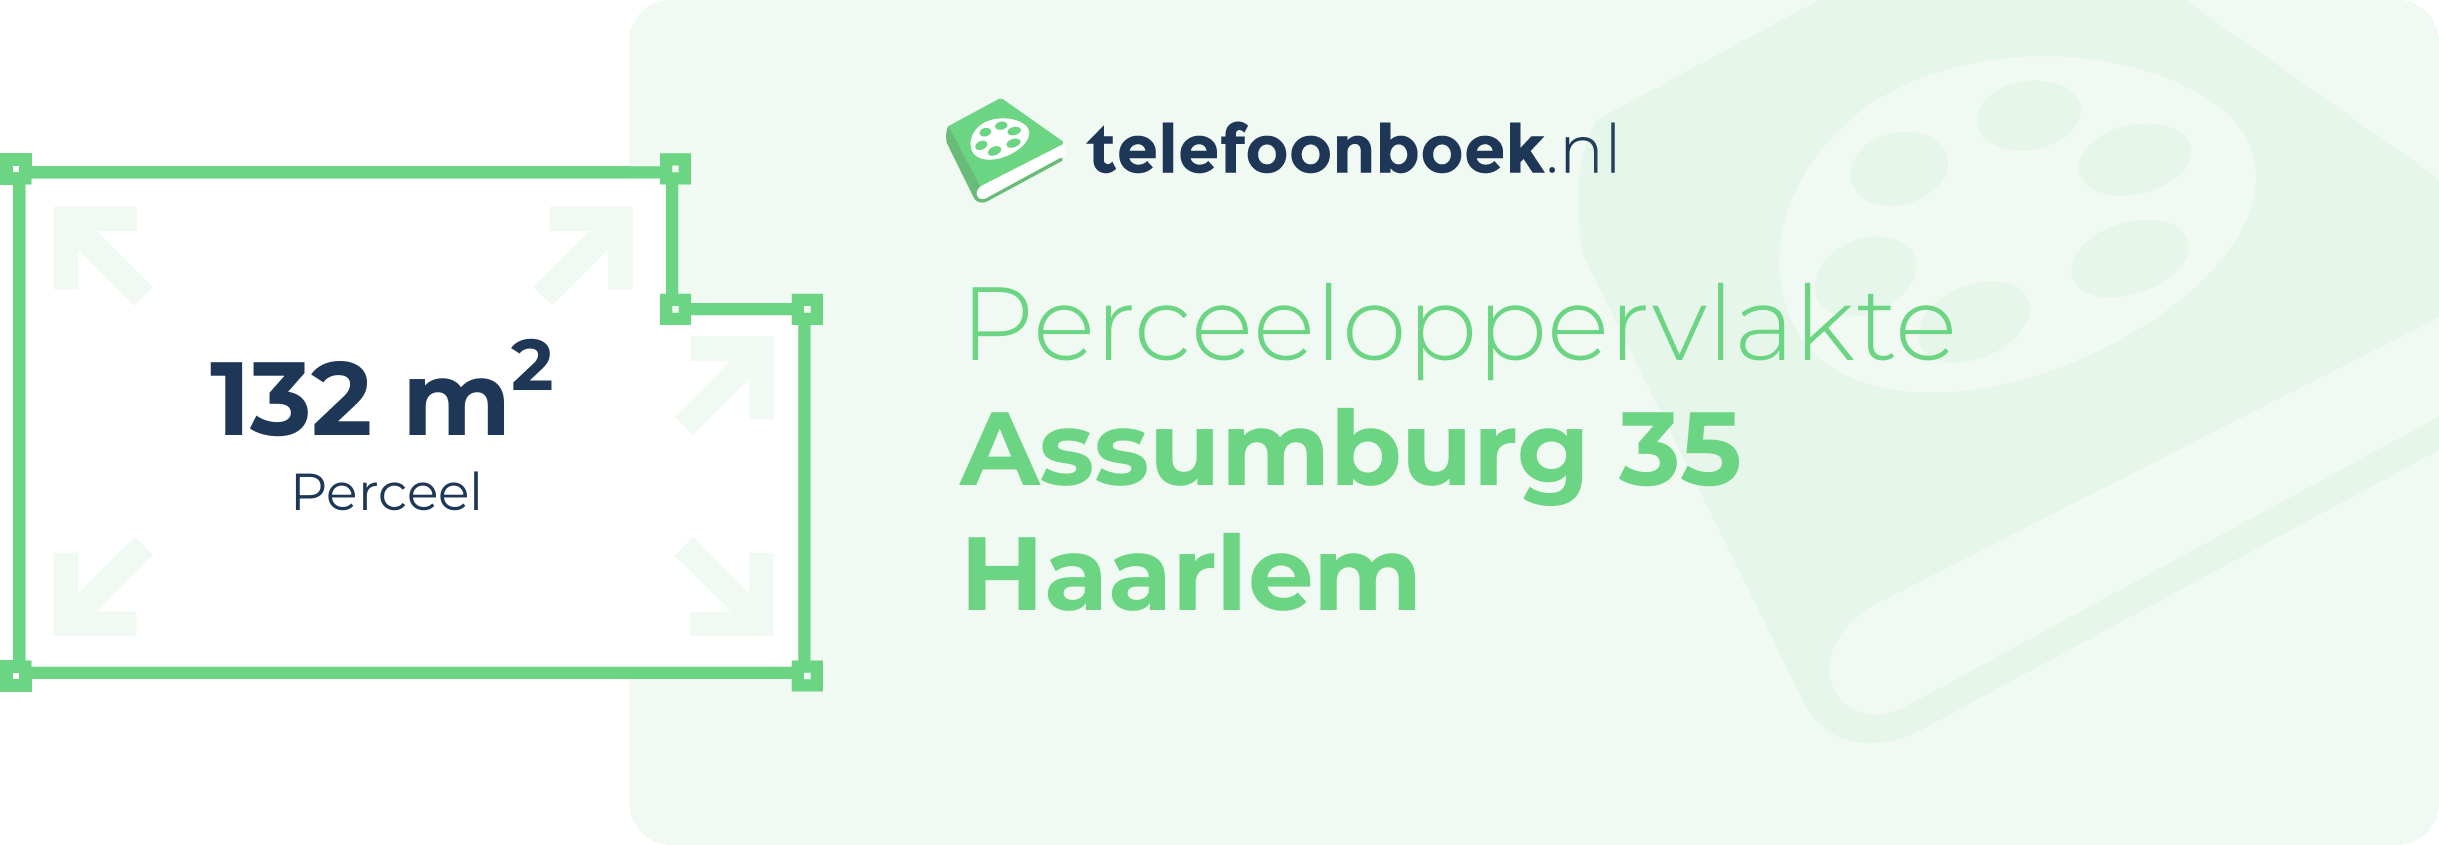 Perceeloppervlakte Assumburg 35 Haarlem